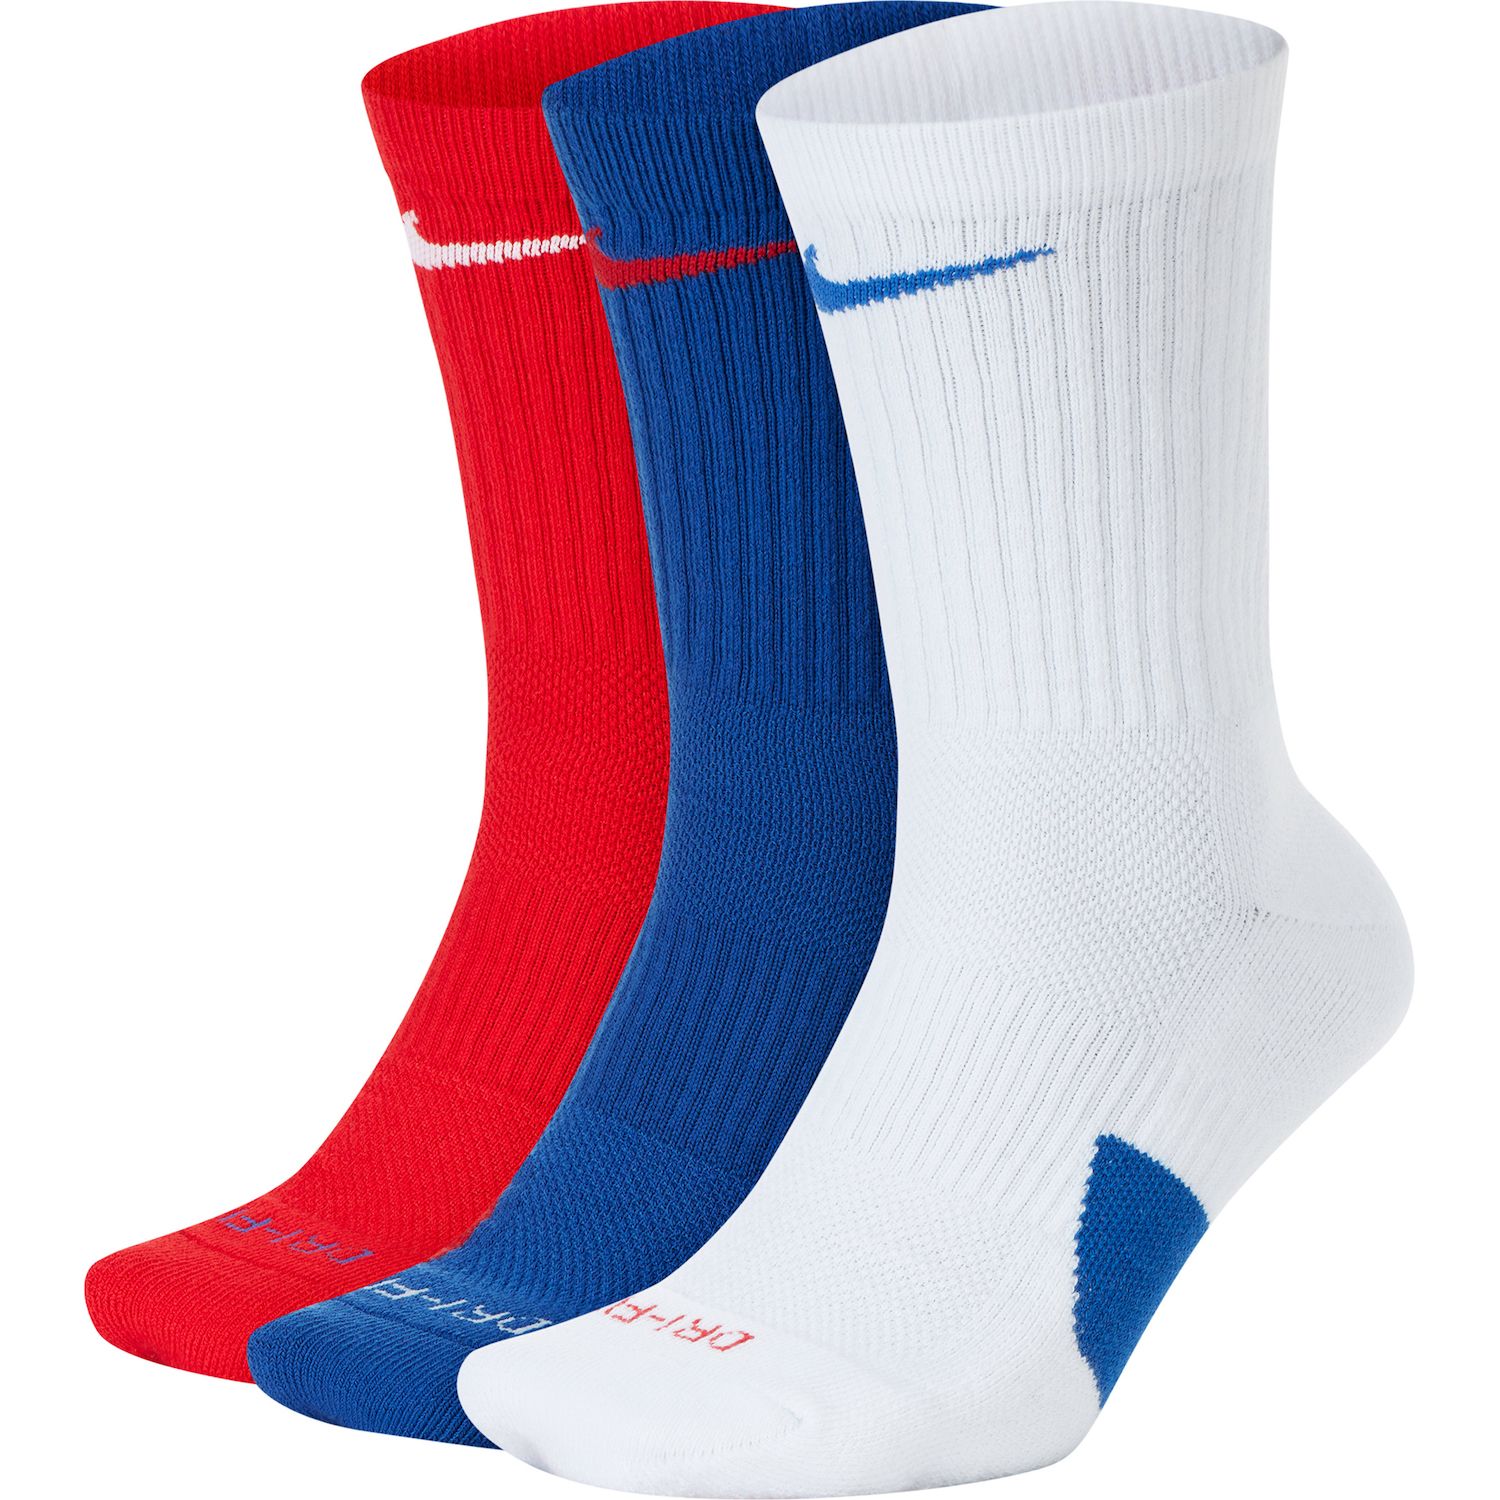 blue and white nike elite socks